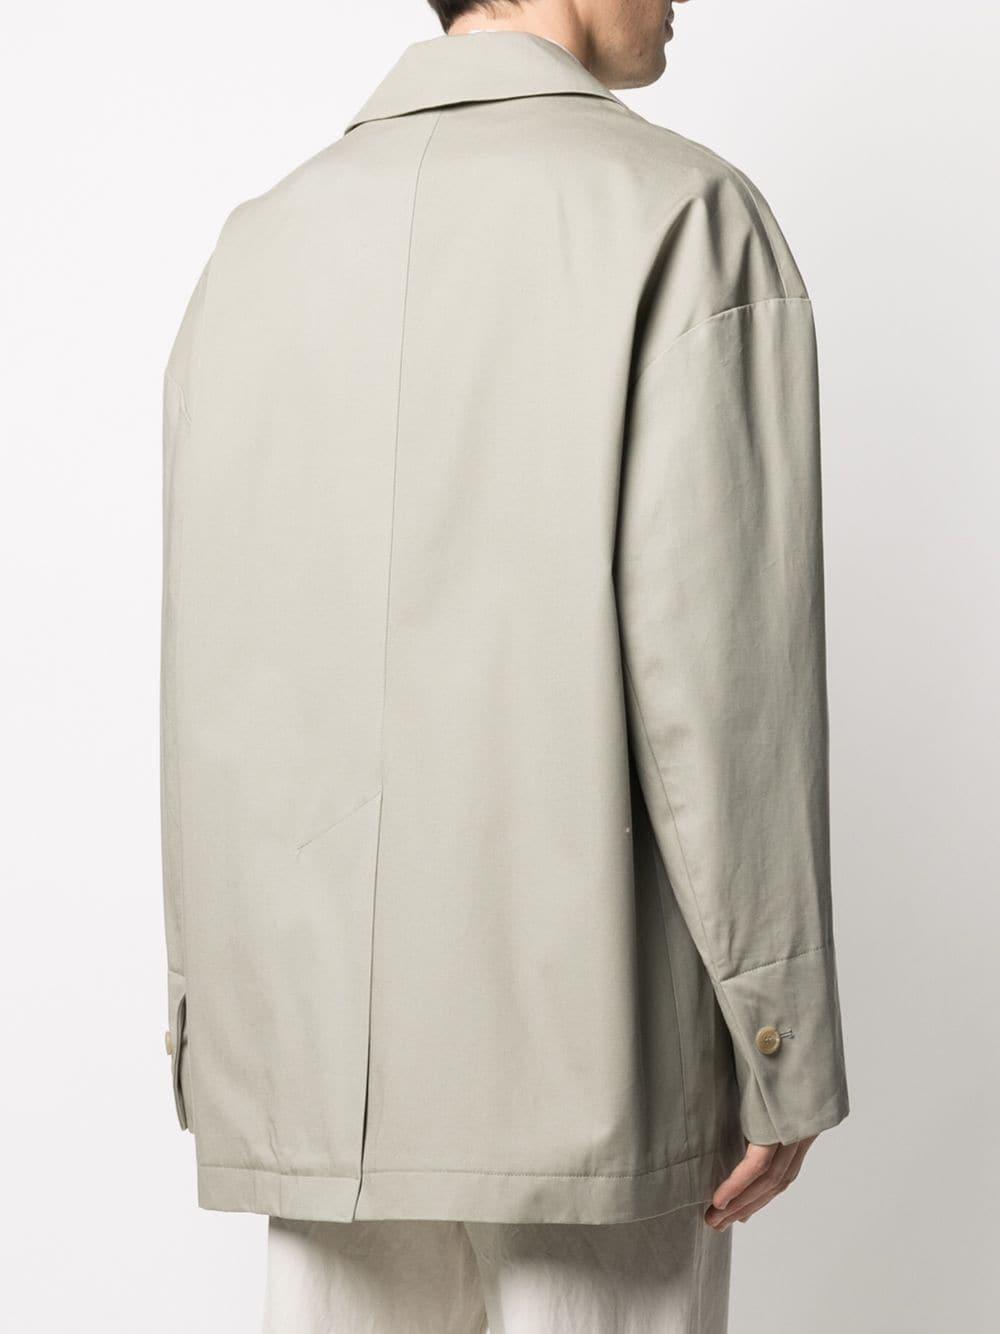 Jacquemus Cotton Blazer Jacket in Green for Men - Lyst